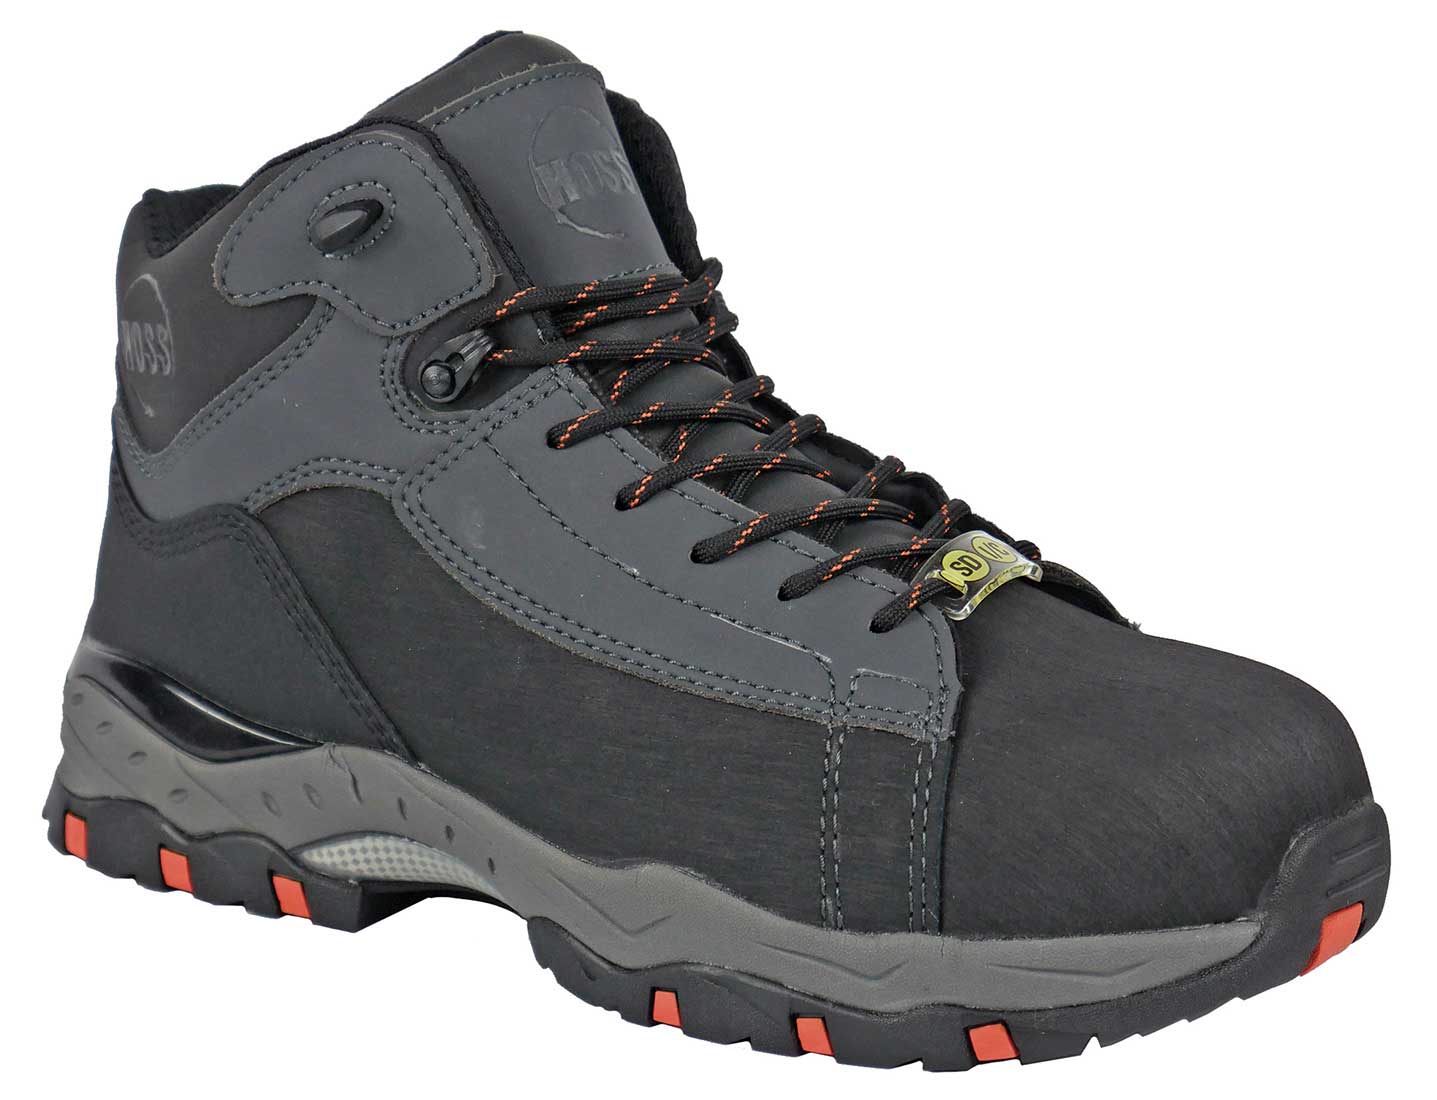 Hoss Boots 53010 Chaser Men's 4 Composite Toe Work & Hiking Shoe - Extra Depth